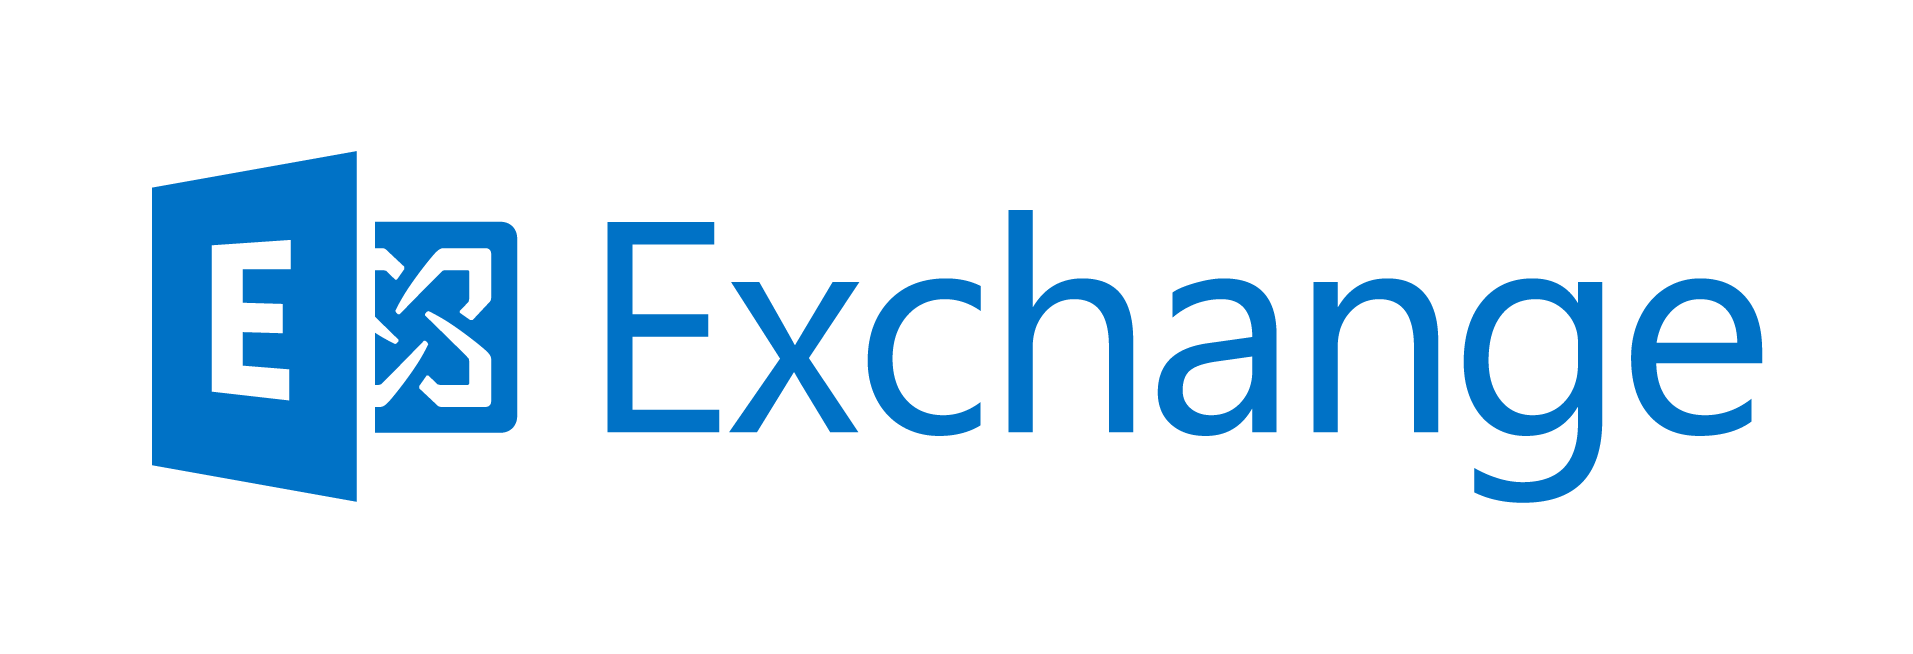 Exchange 2013 has a new logo